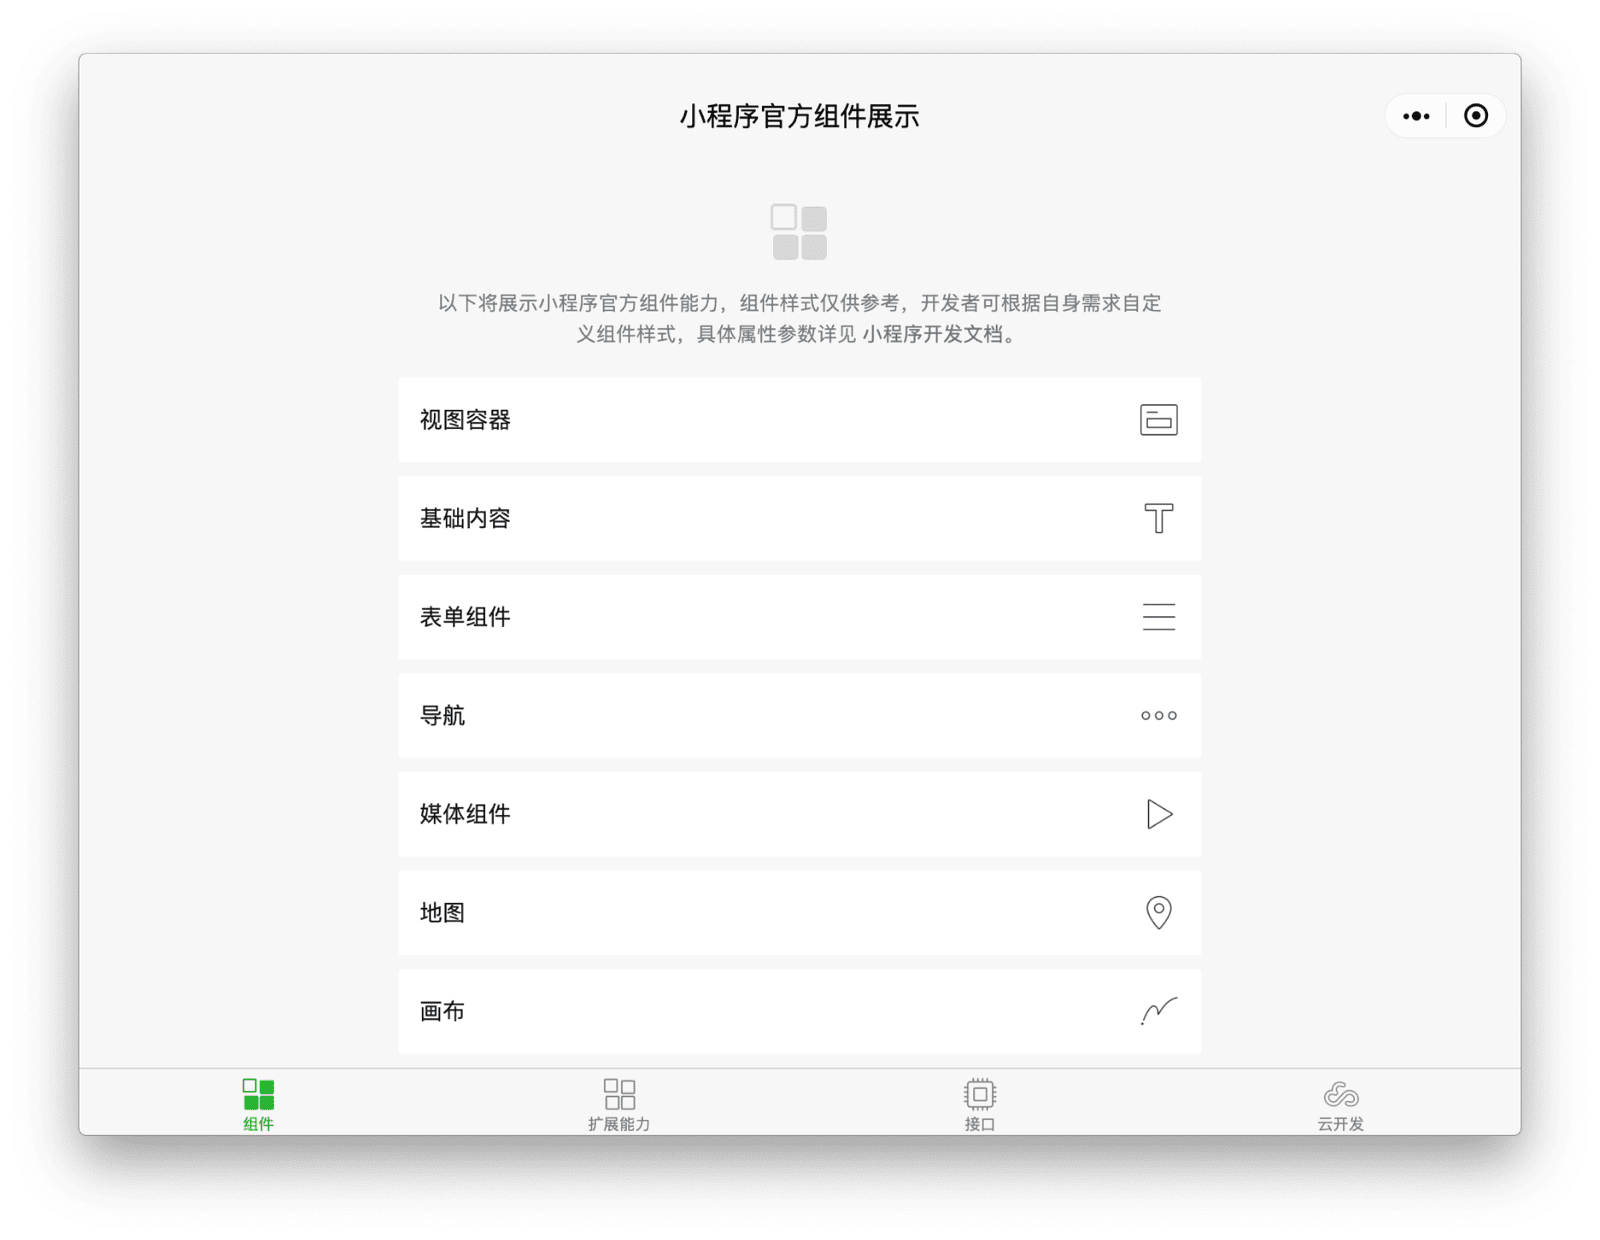 Aplikasi demo komponen WeChat di jendela aplikasi responsif yang dapat diubah ukurannya dan secara default lebih lebar daripada layar seluler biasa.